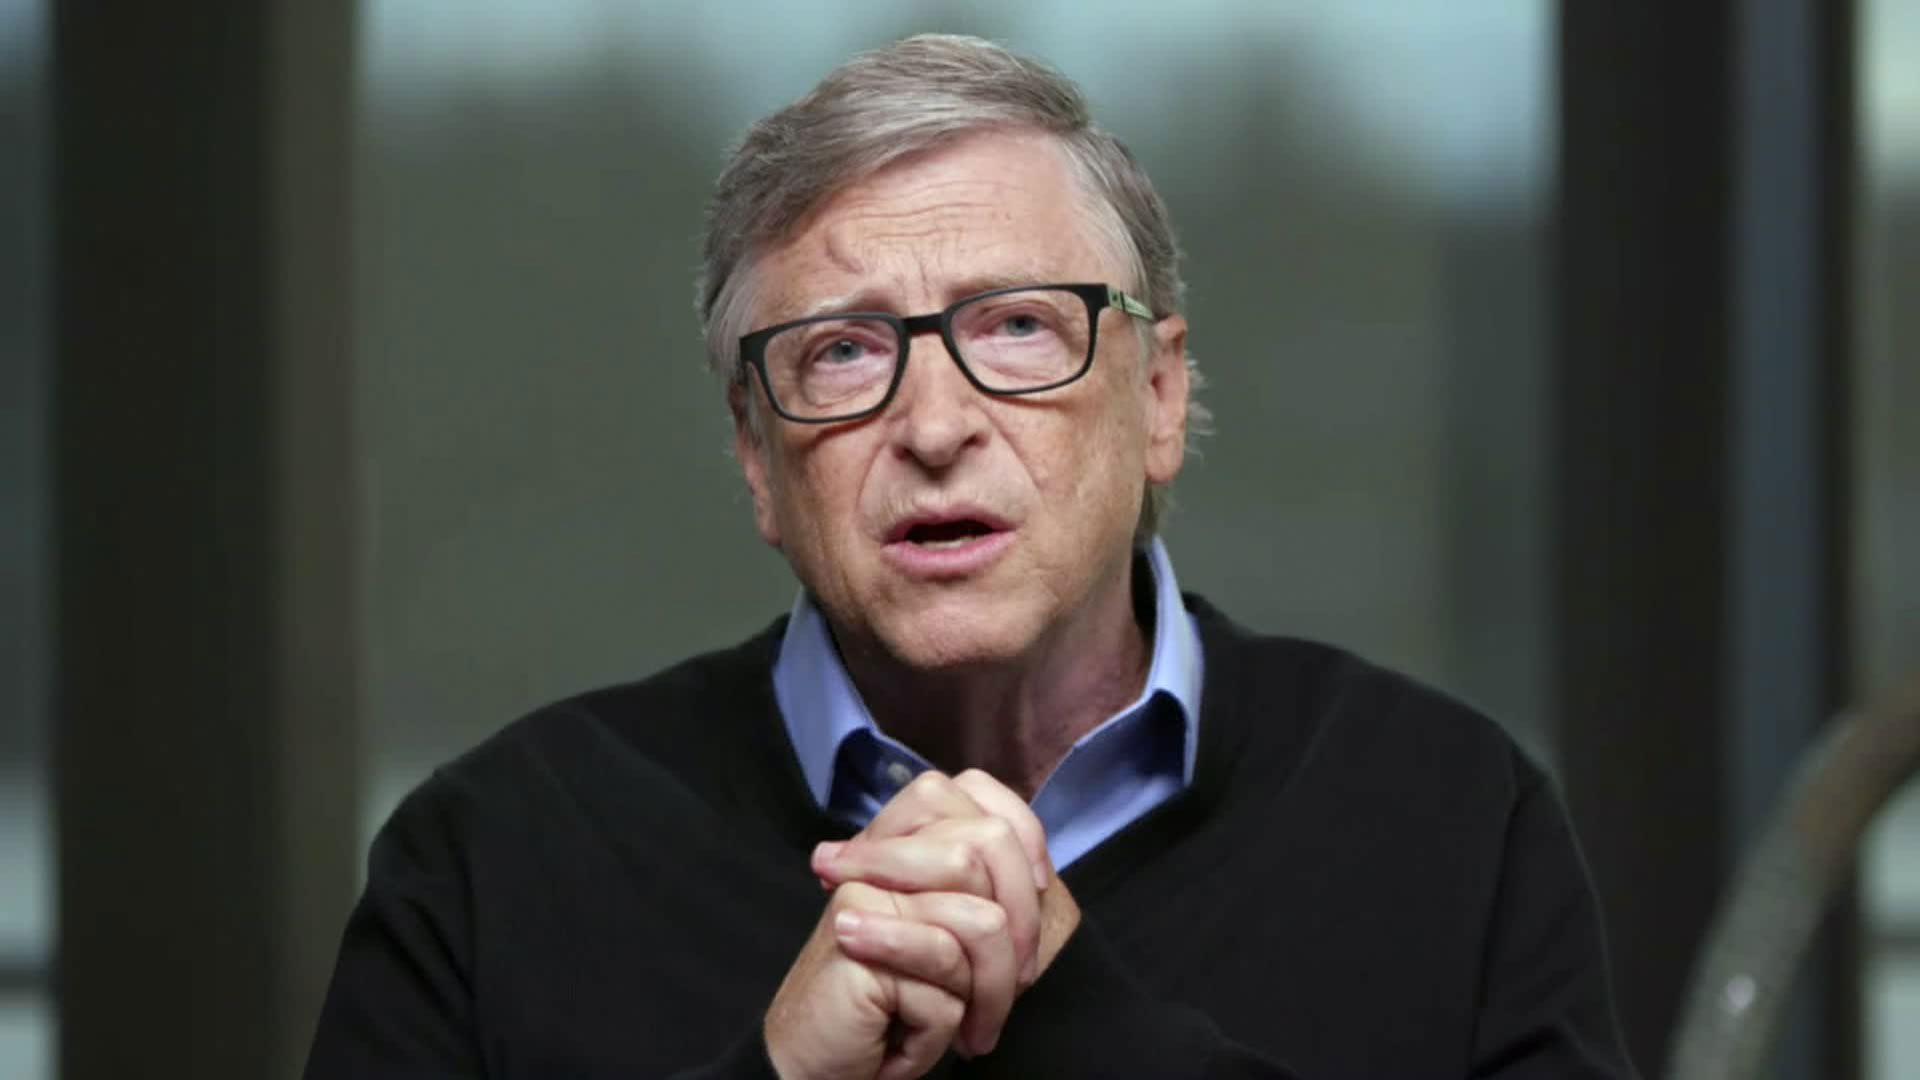 Bill Gates speaks with CNN on Thursday, October 8.